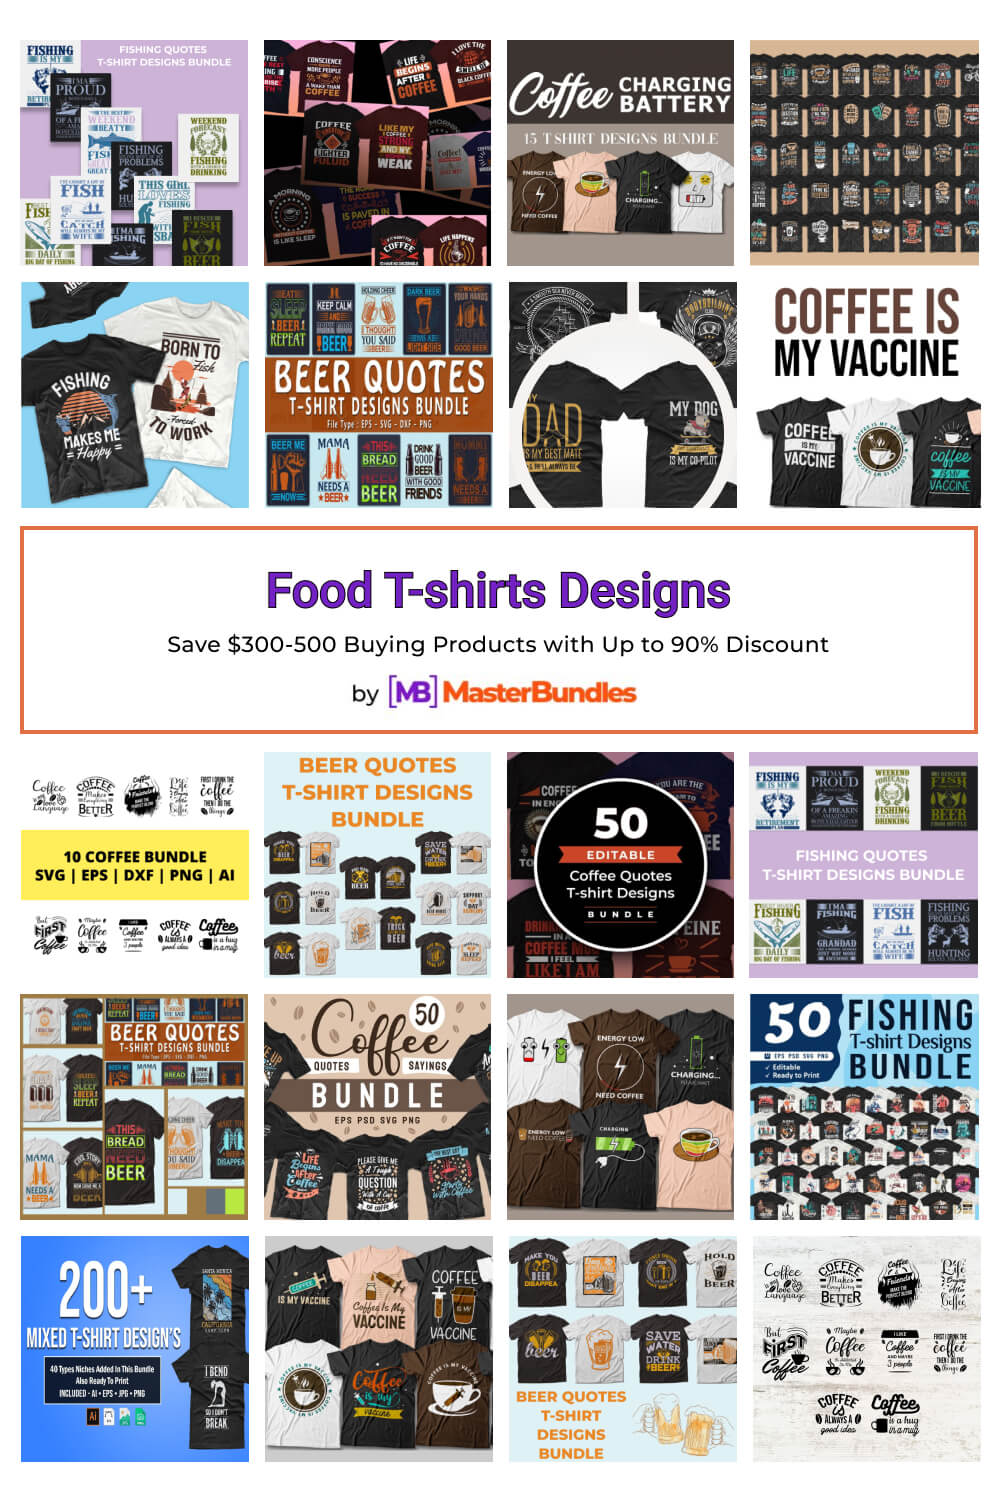 food t shirts designs pinterest image.